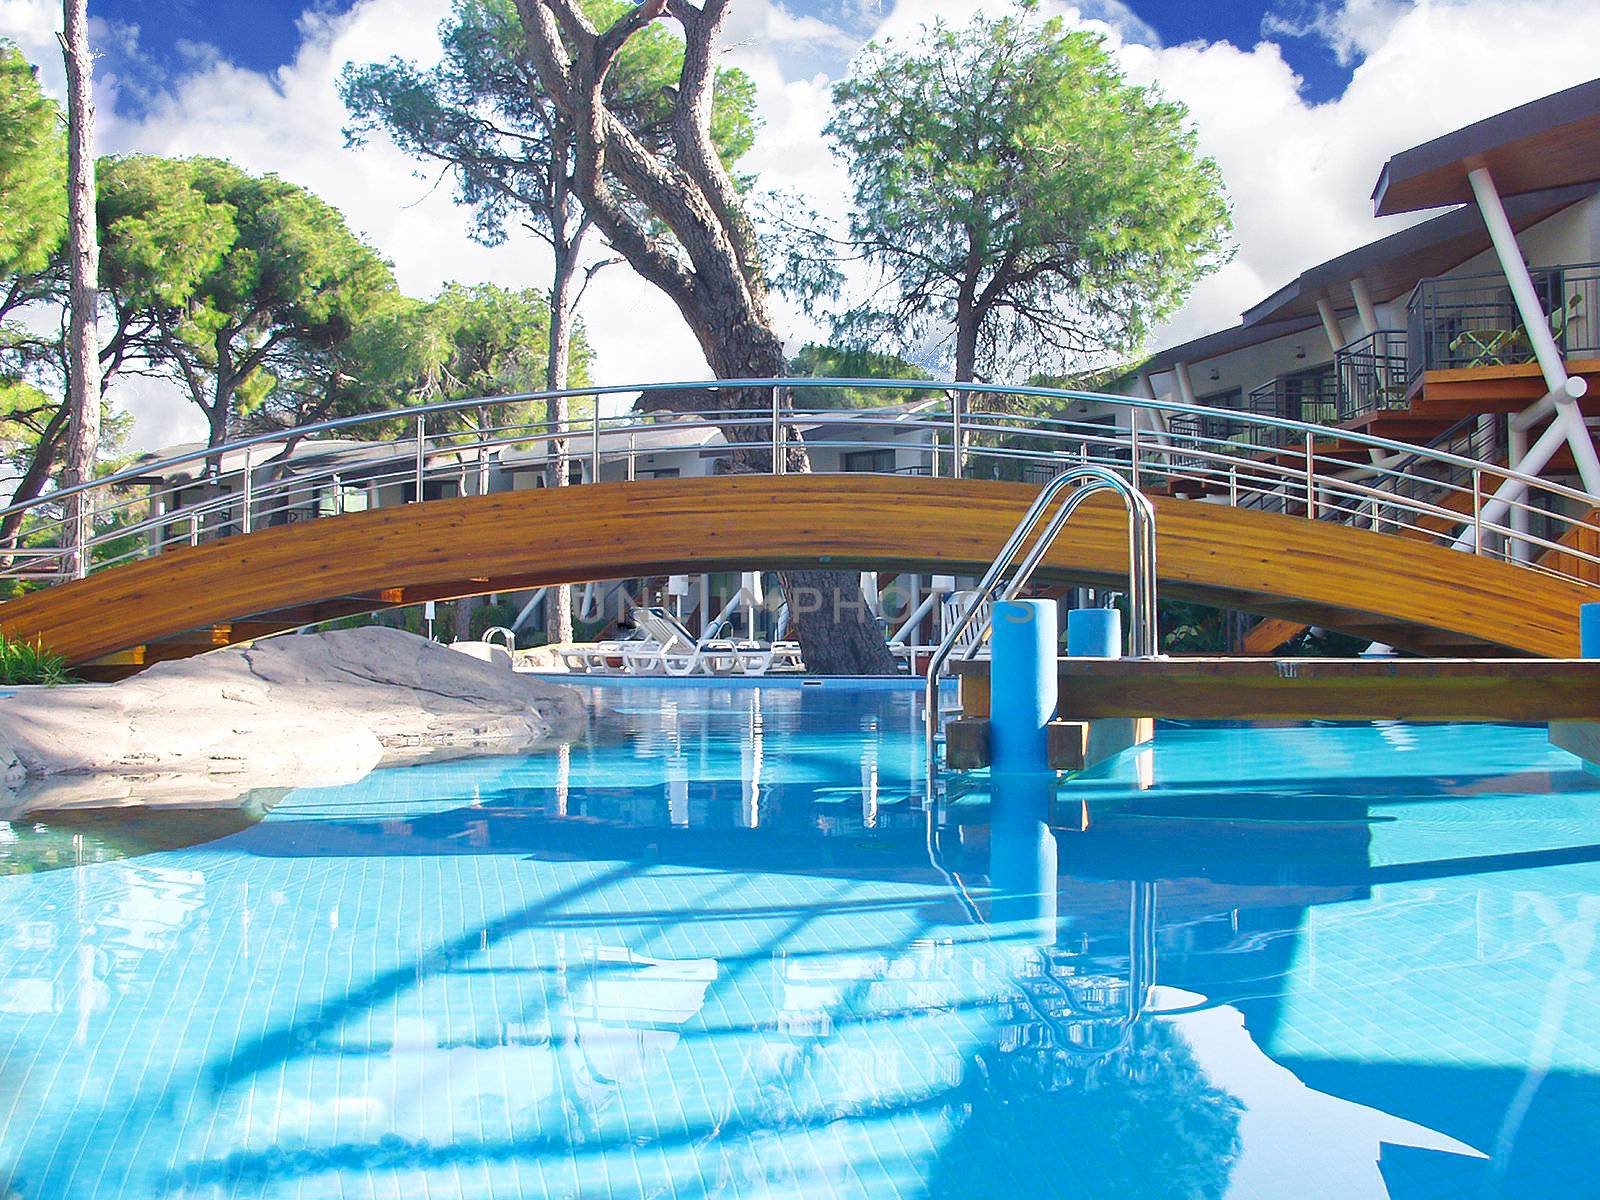 Swimming pool in spa resort  by NickNick